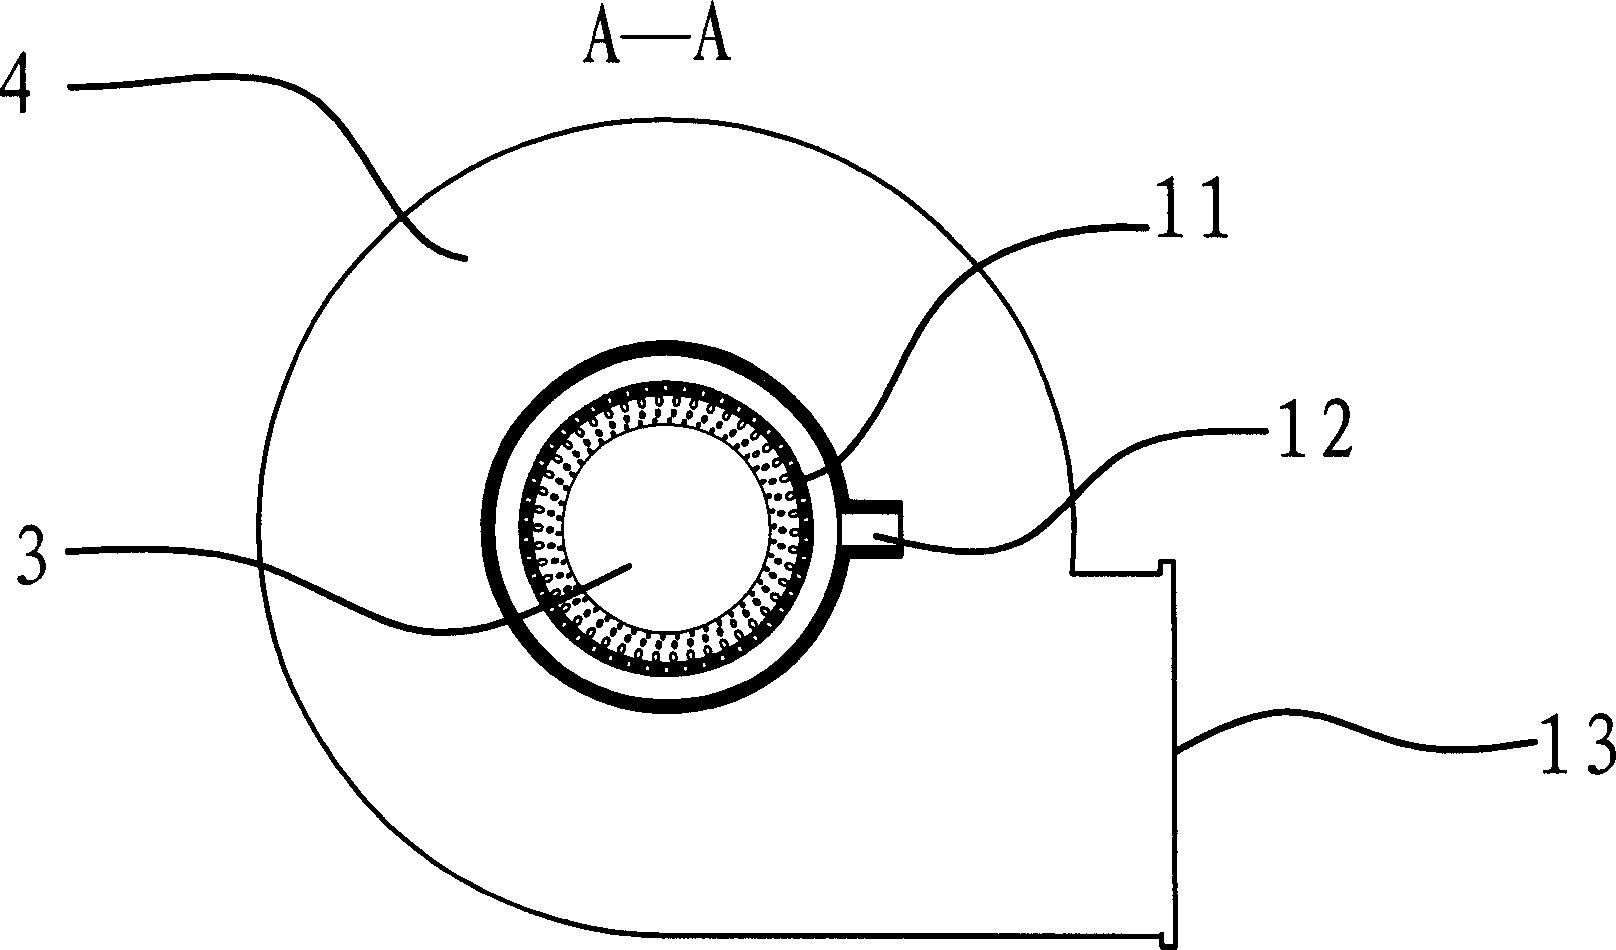 Centrifugal fan for purification treatment